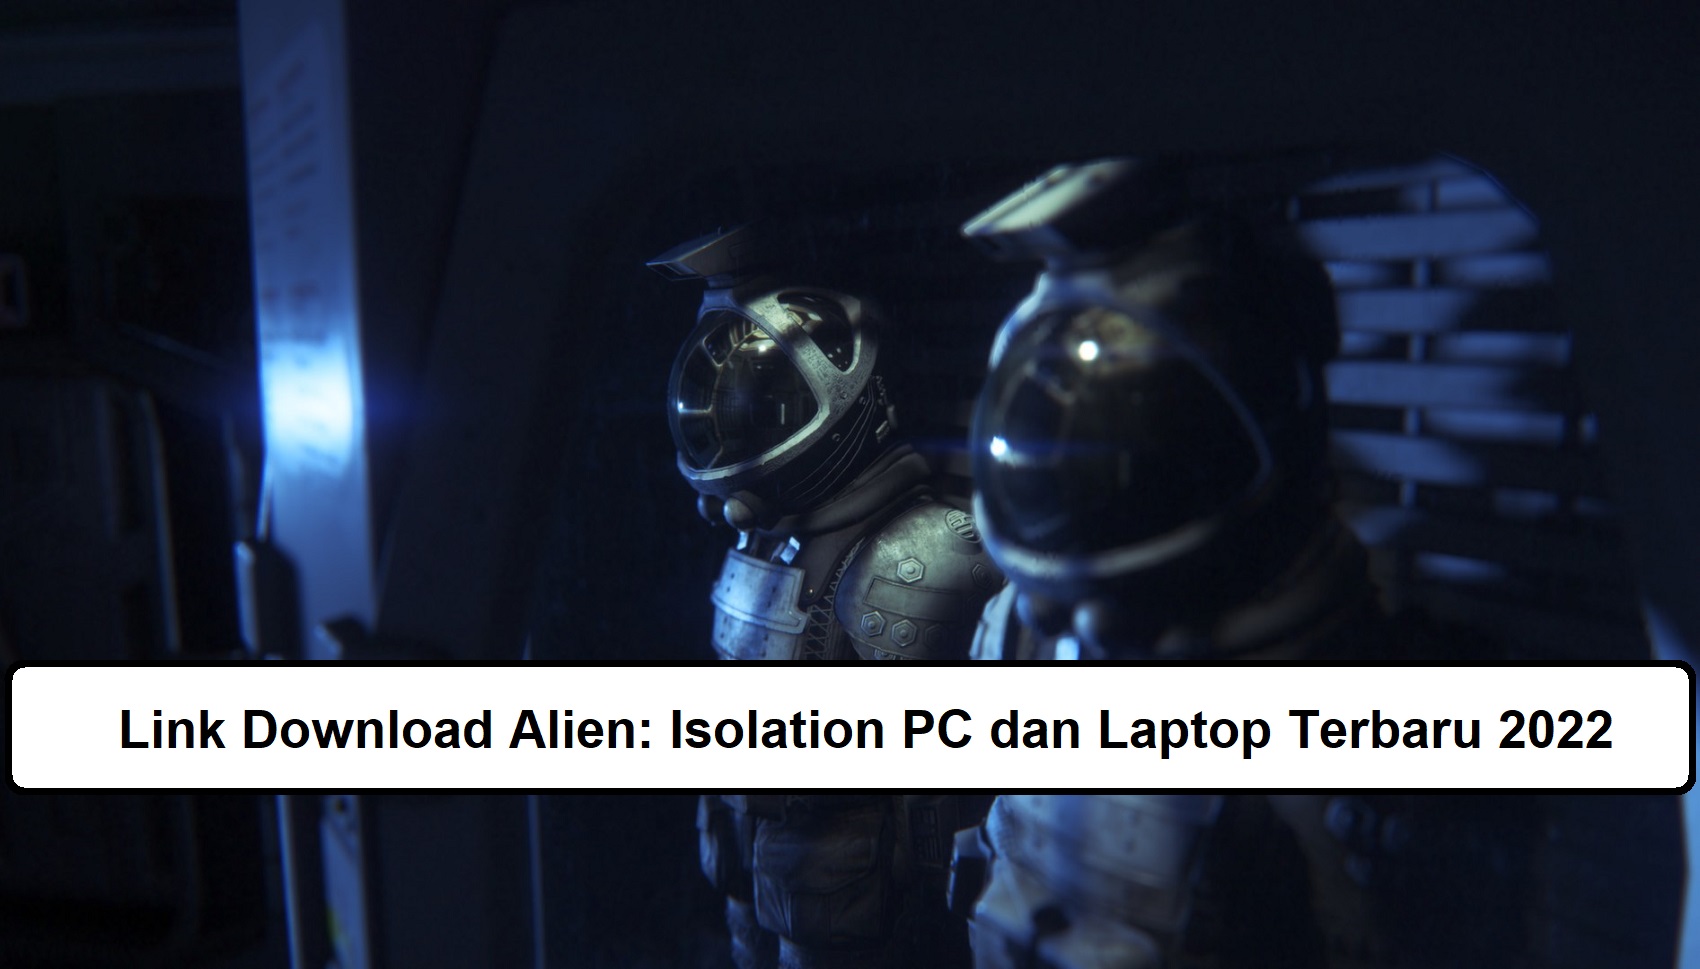 Link Download Alien: Isolation PC dan Laptop Terbaru 2022